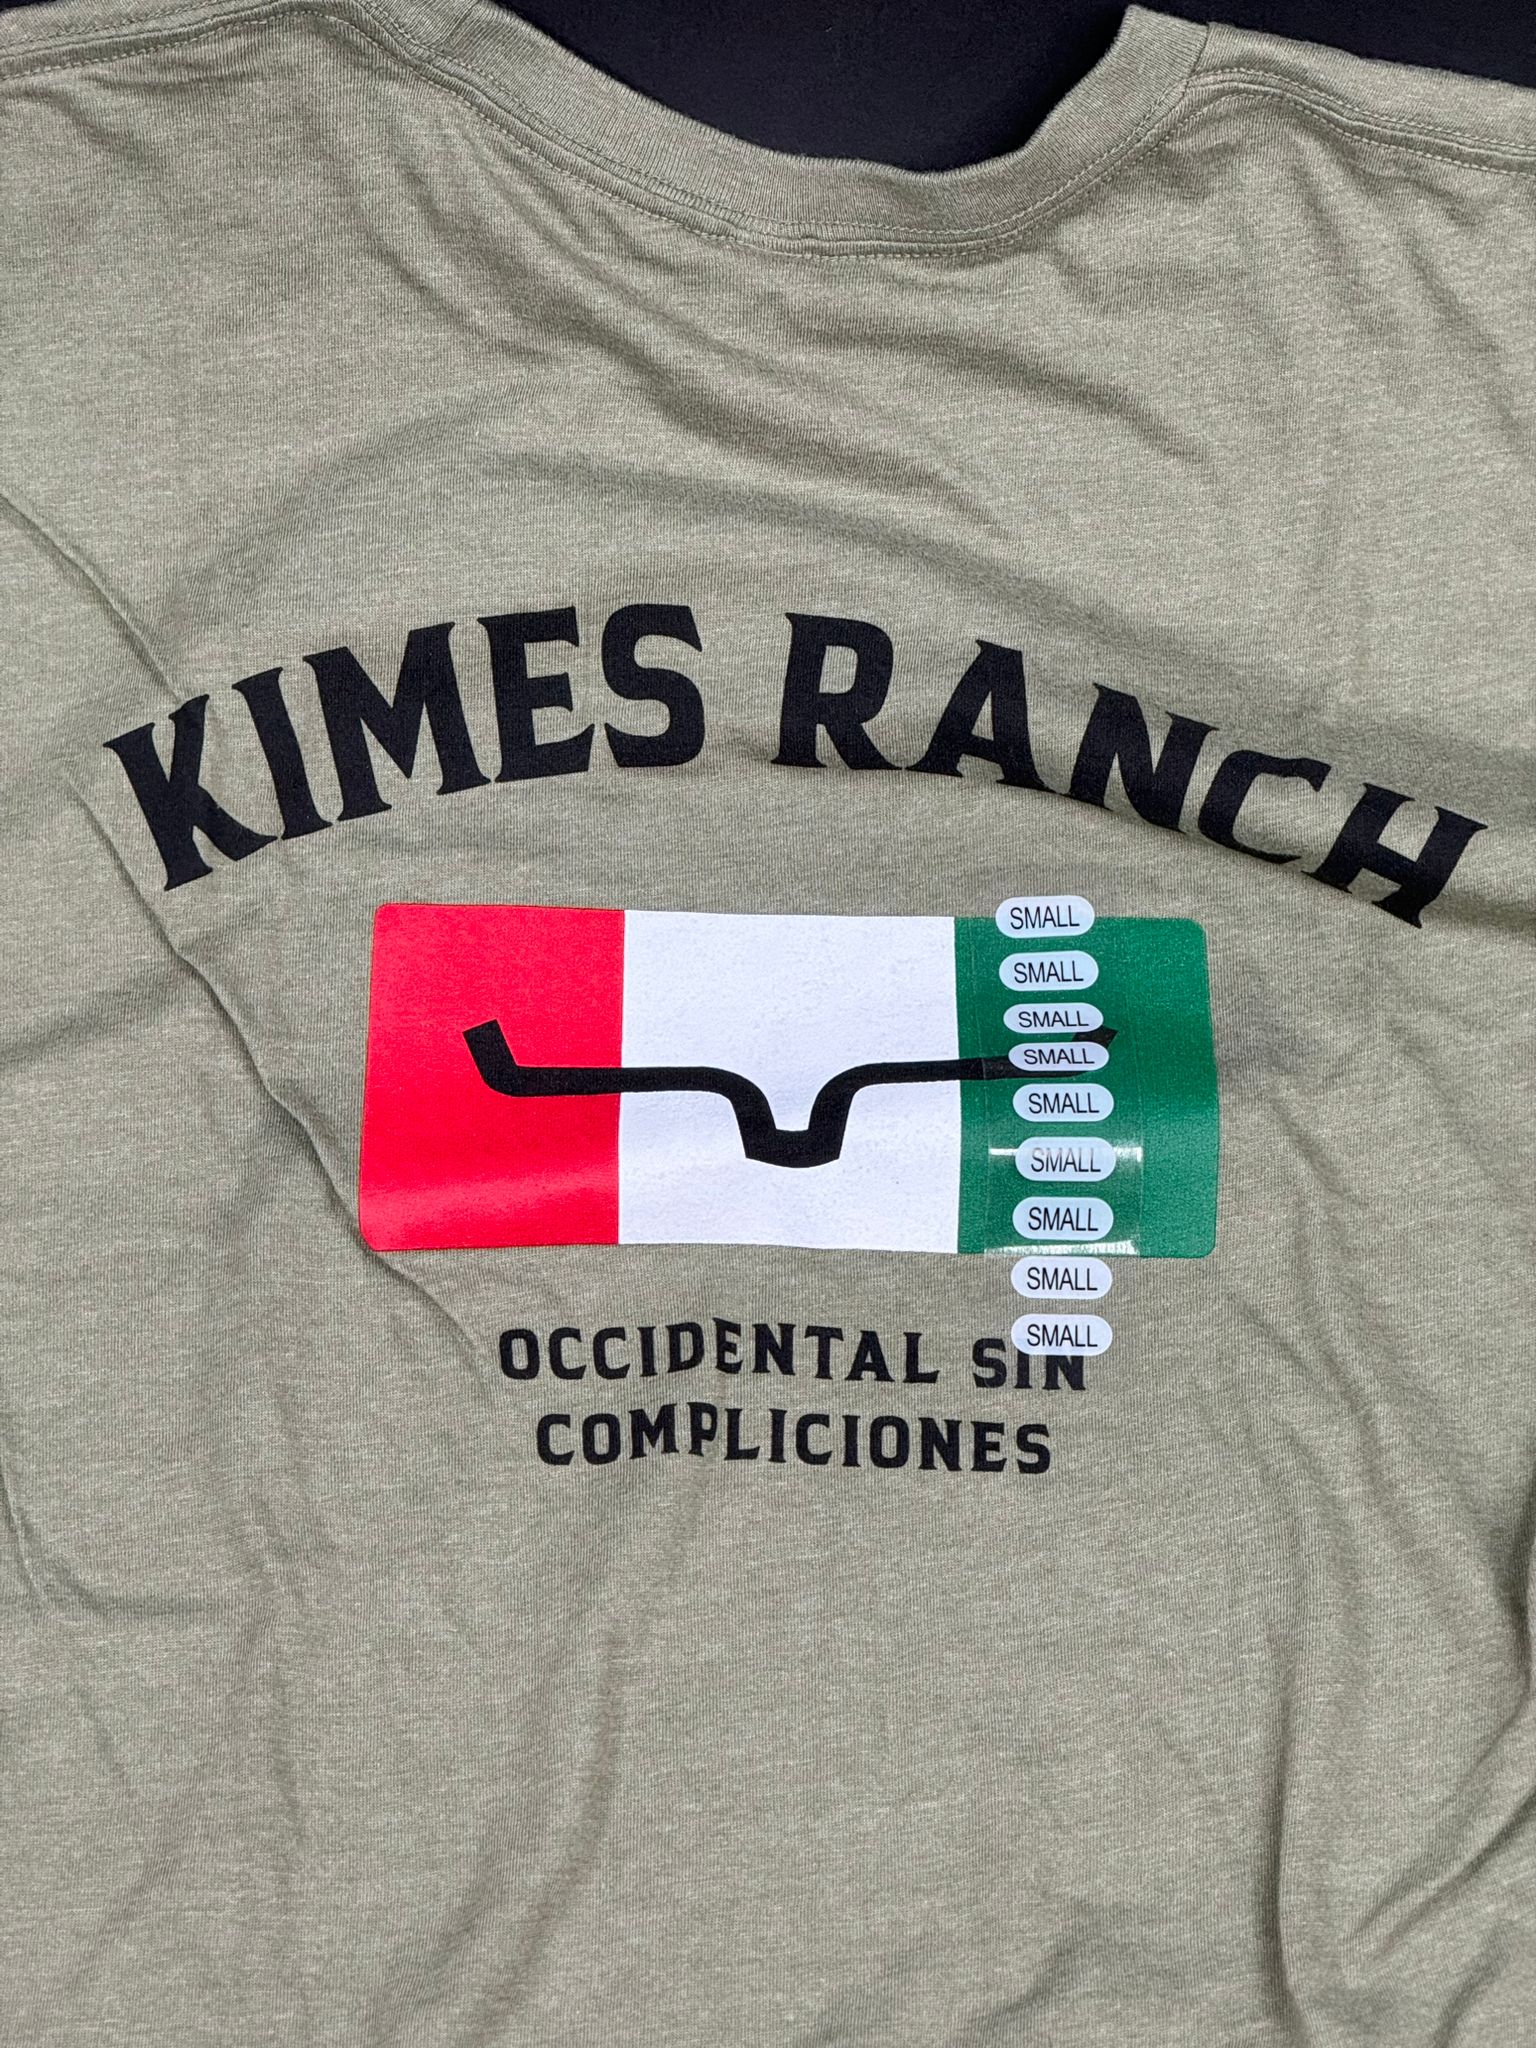 Camiseta Ariat Viva México Roja